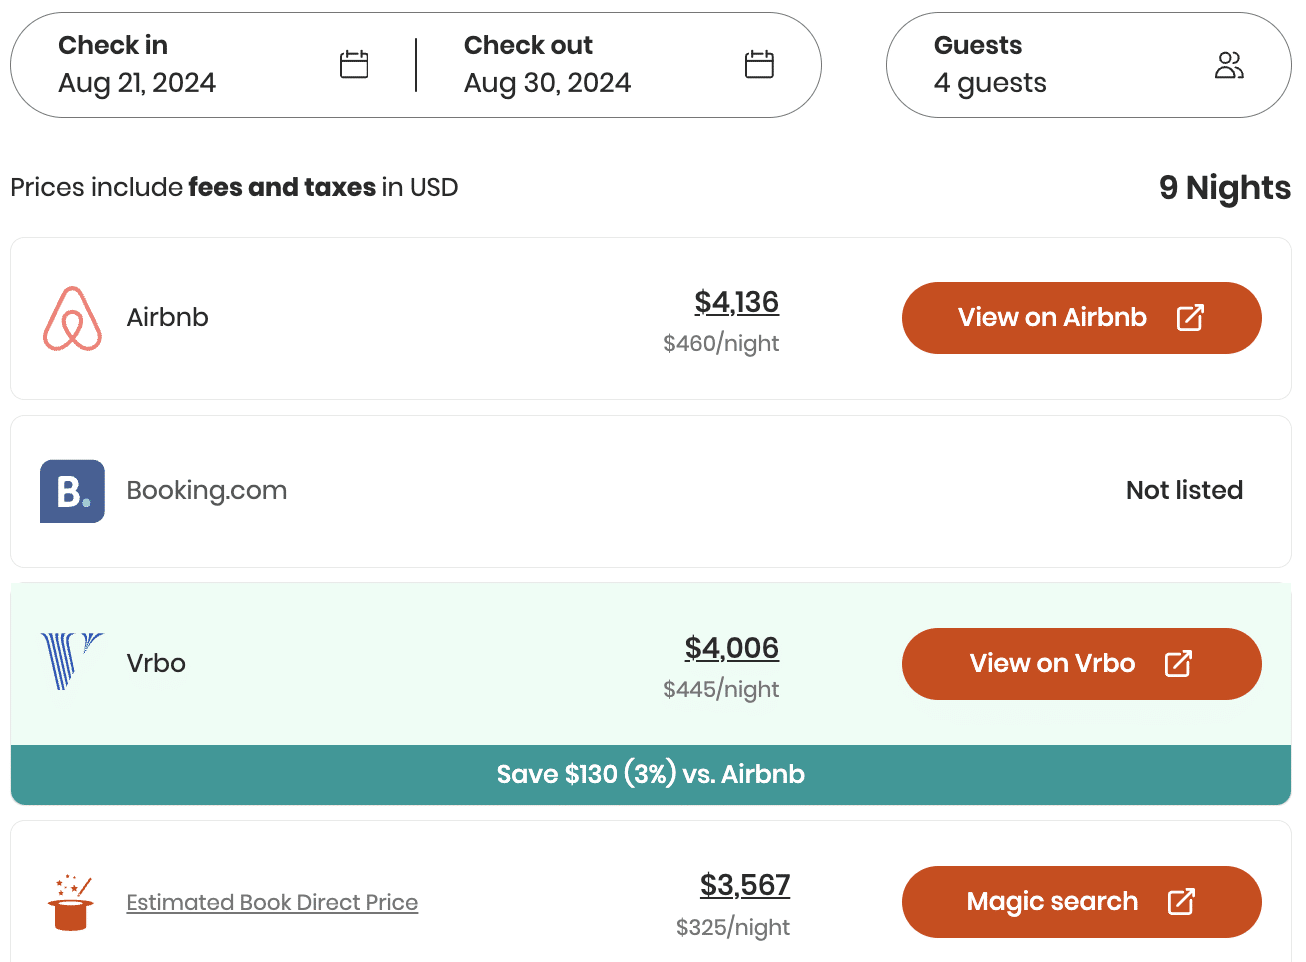 HiChee's price comparison results for this cabin